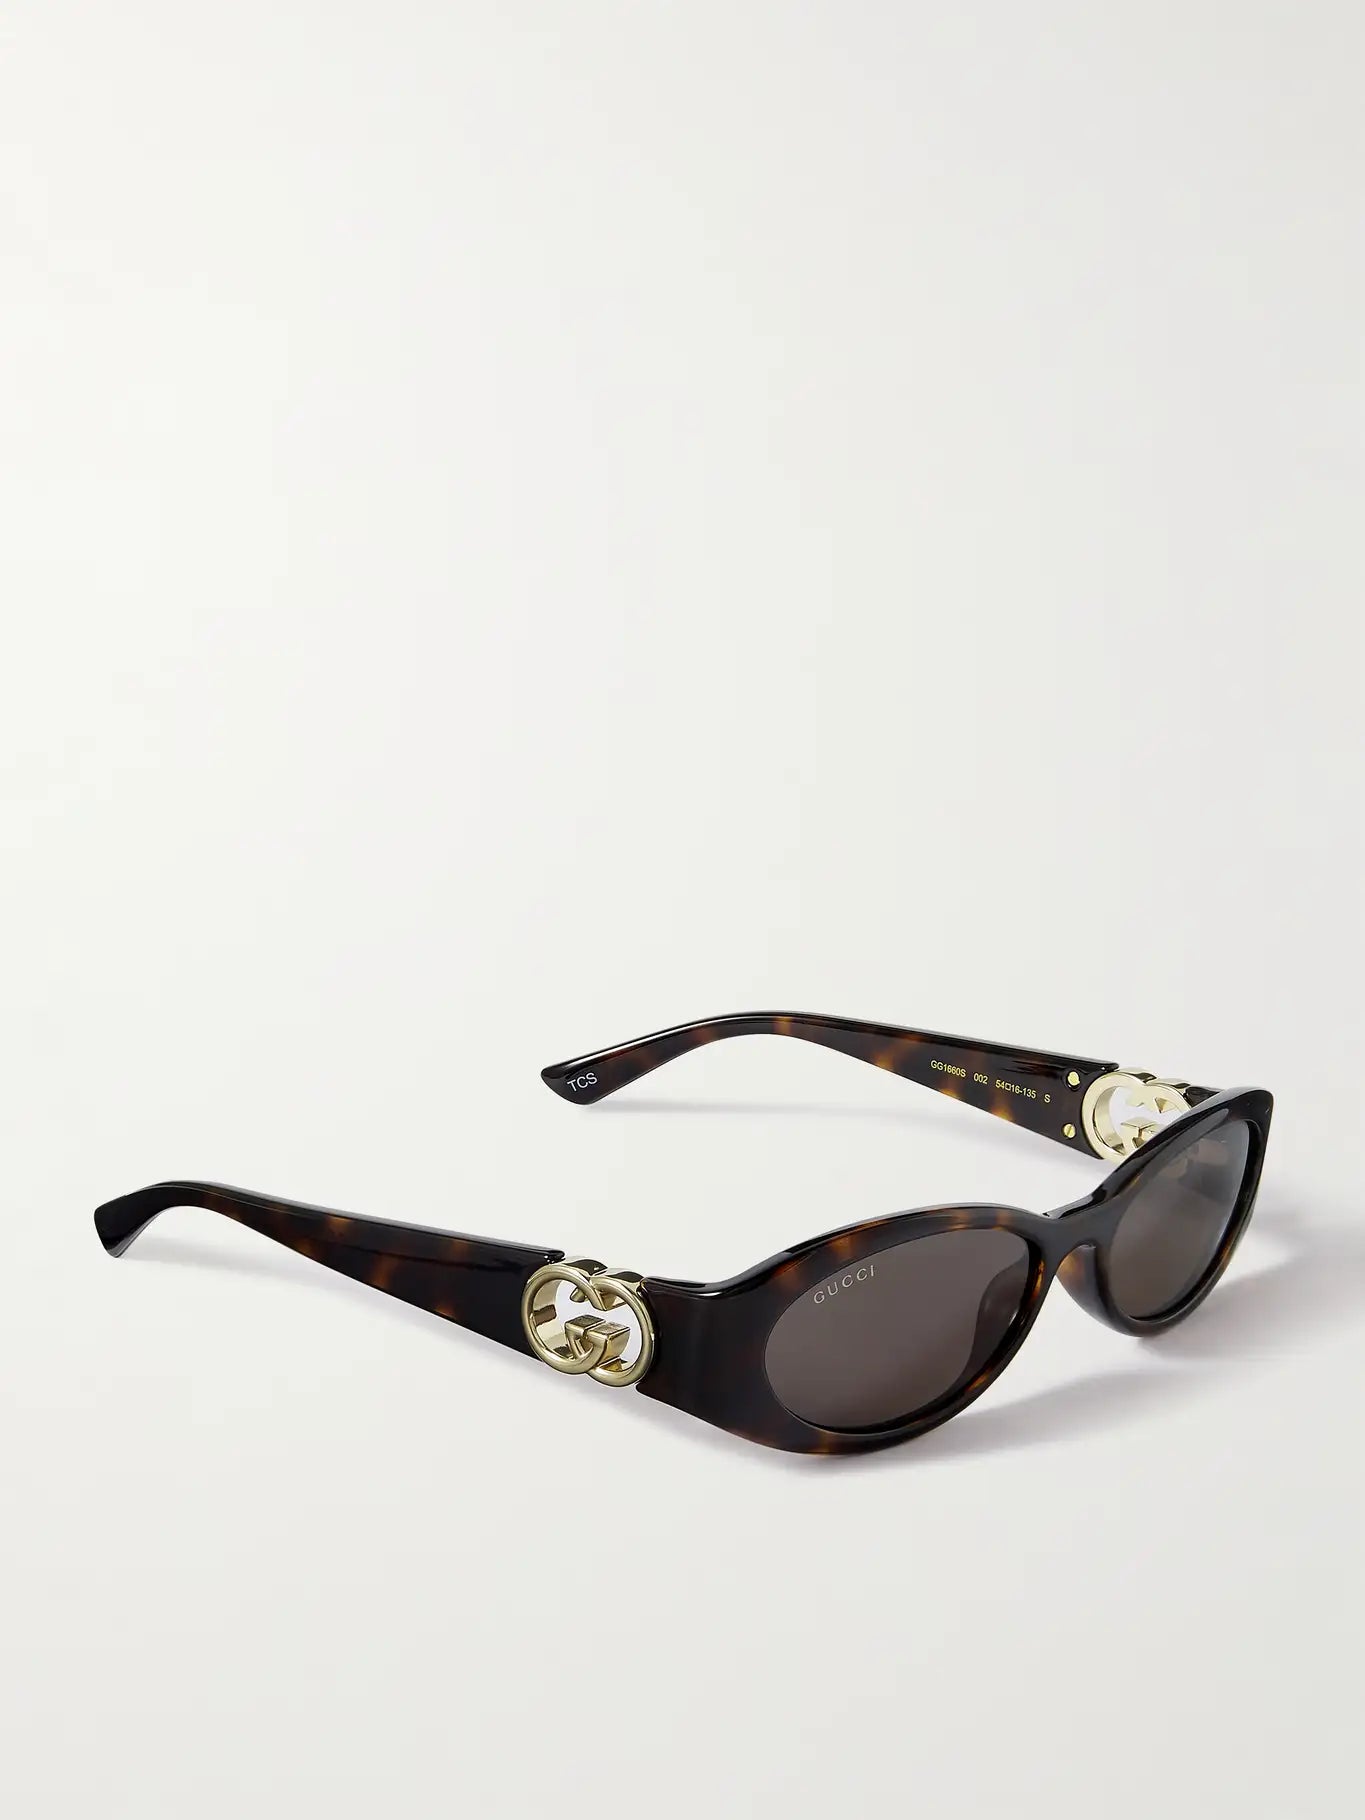 Gucci Oval Sunglasses Tortoiseshell GG1660S002